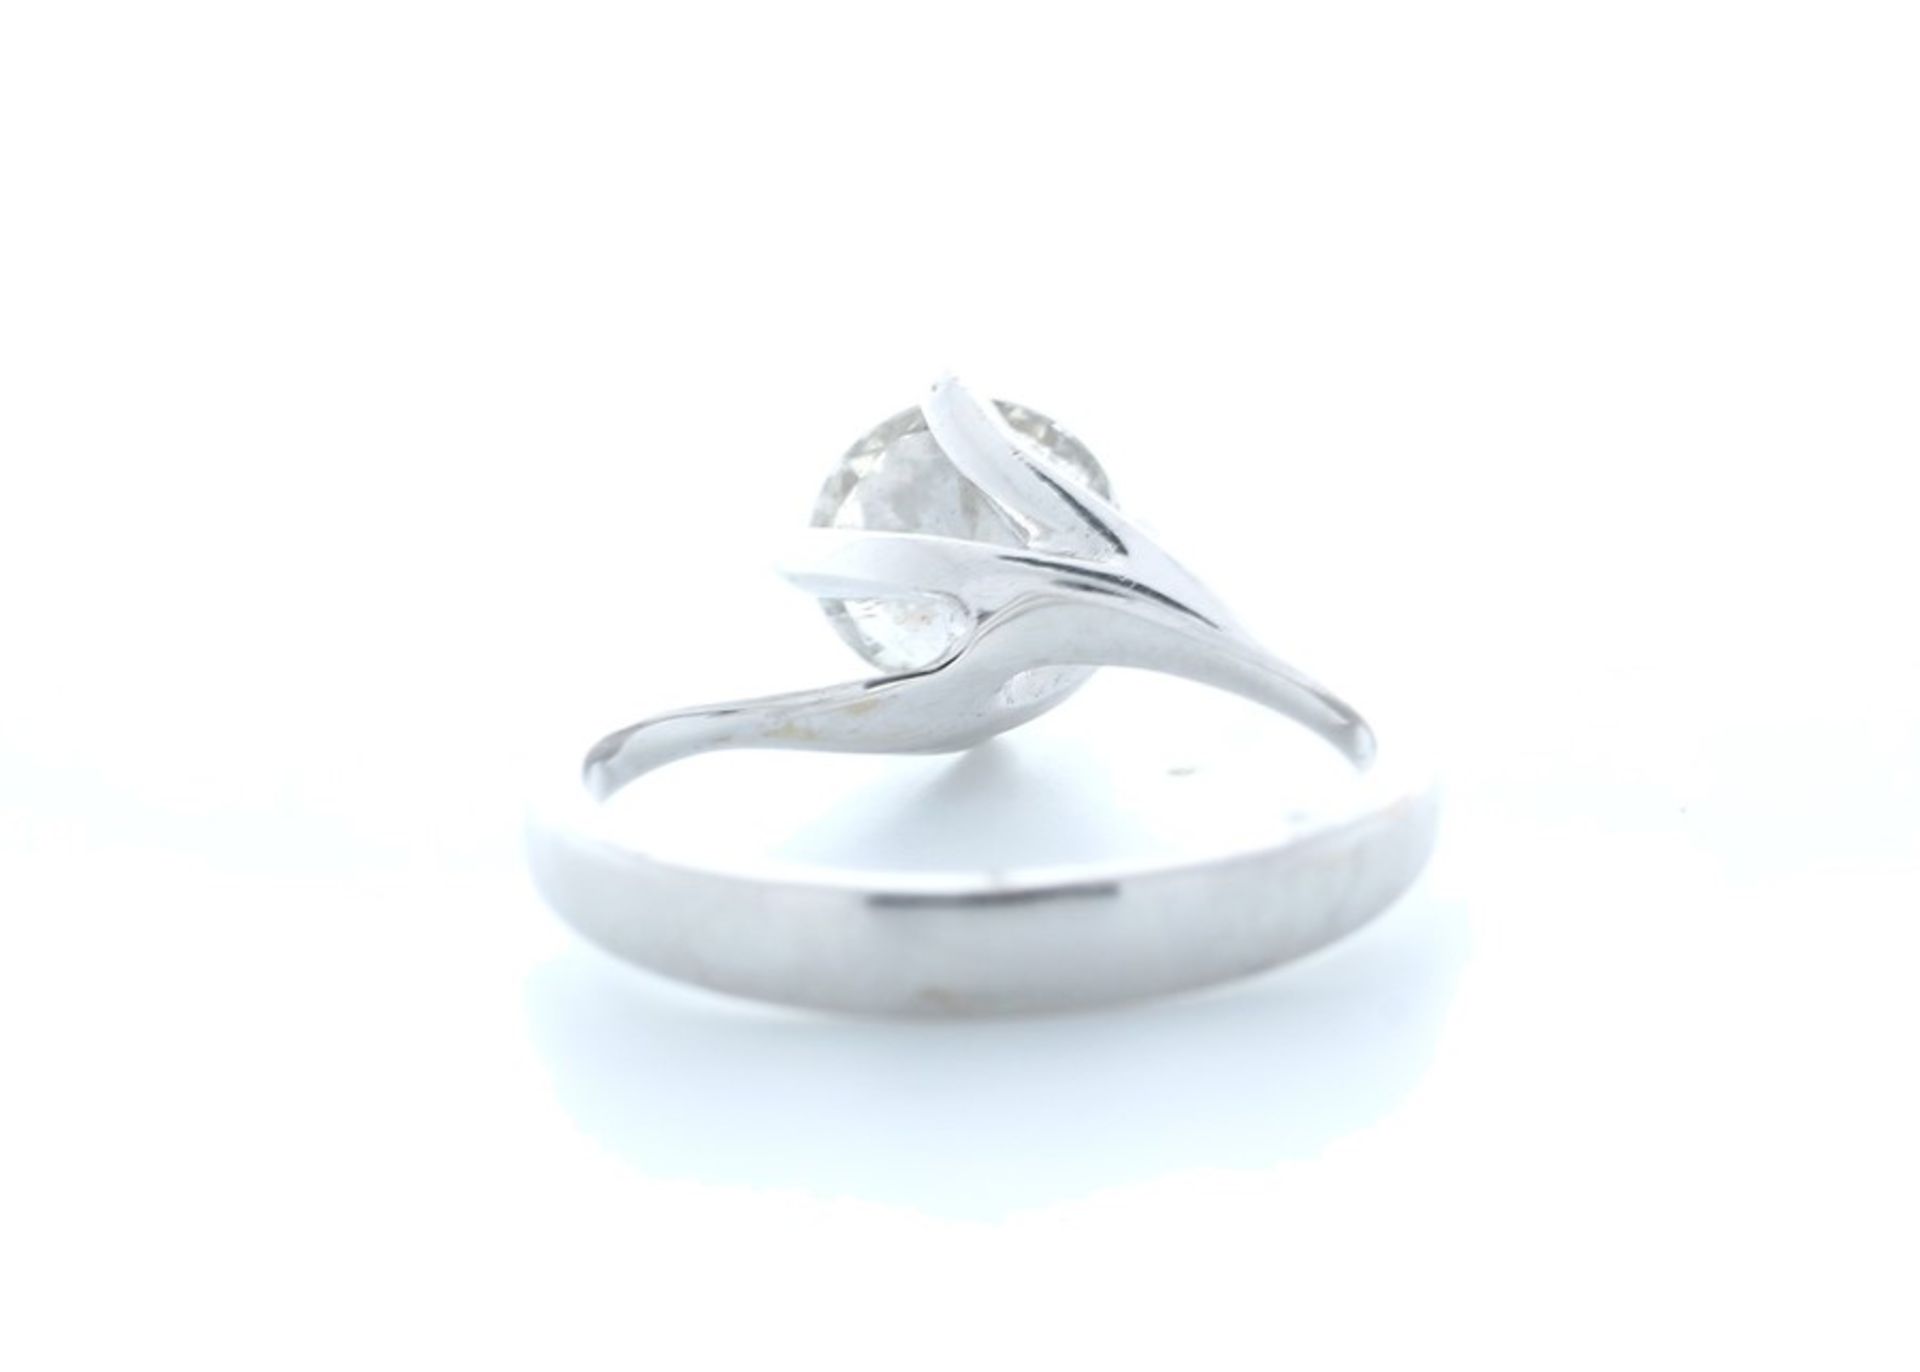 18ct White Gold Single Stone Prong Set Diamond Ring 1.10 Carats - Valued by IDI £12,000.00 - Image 3 of 5